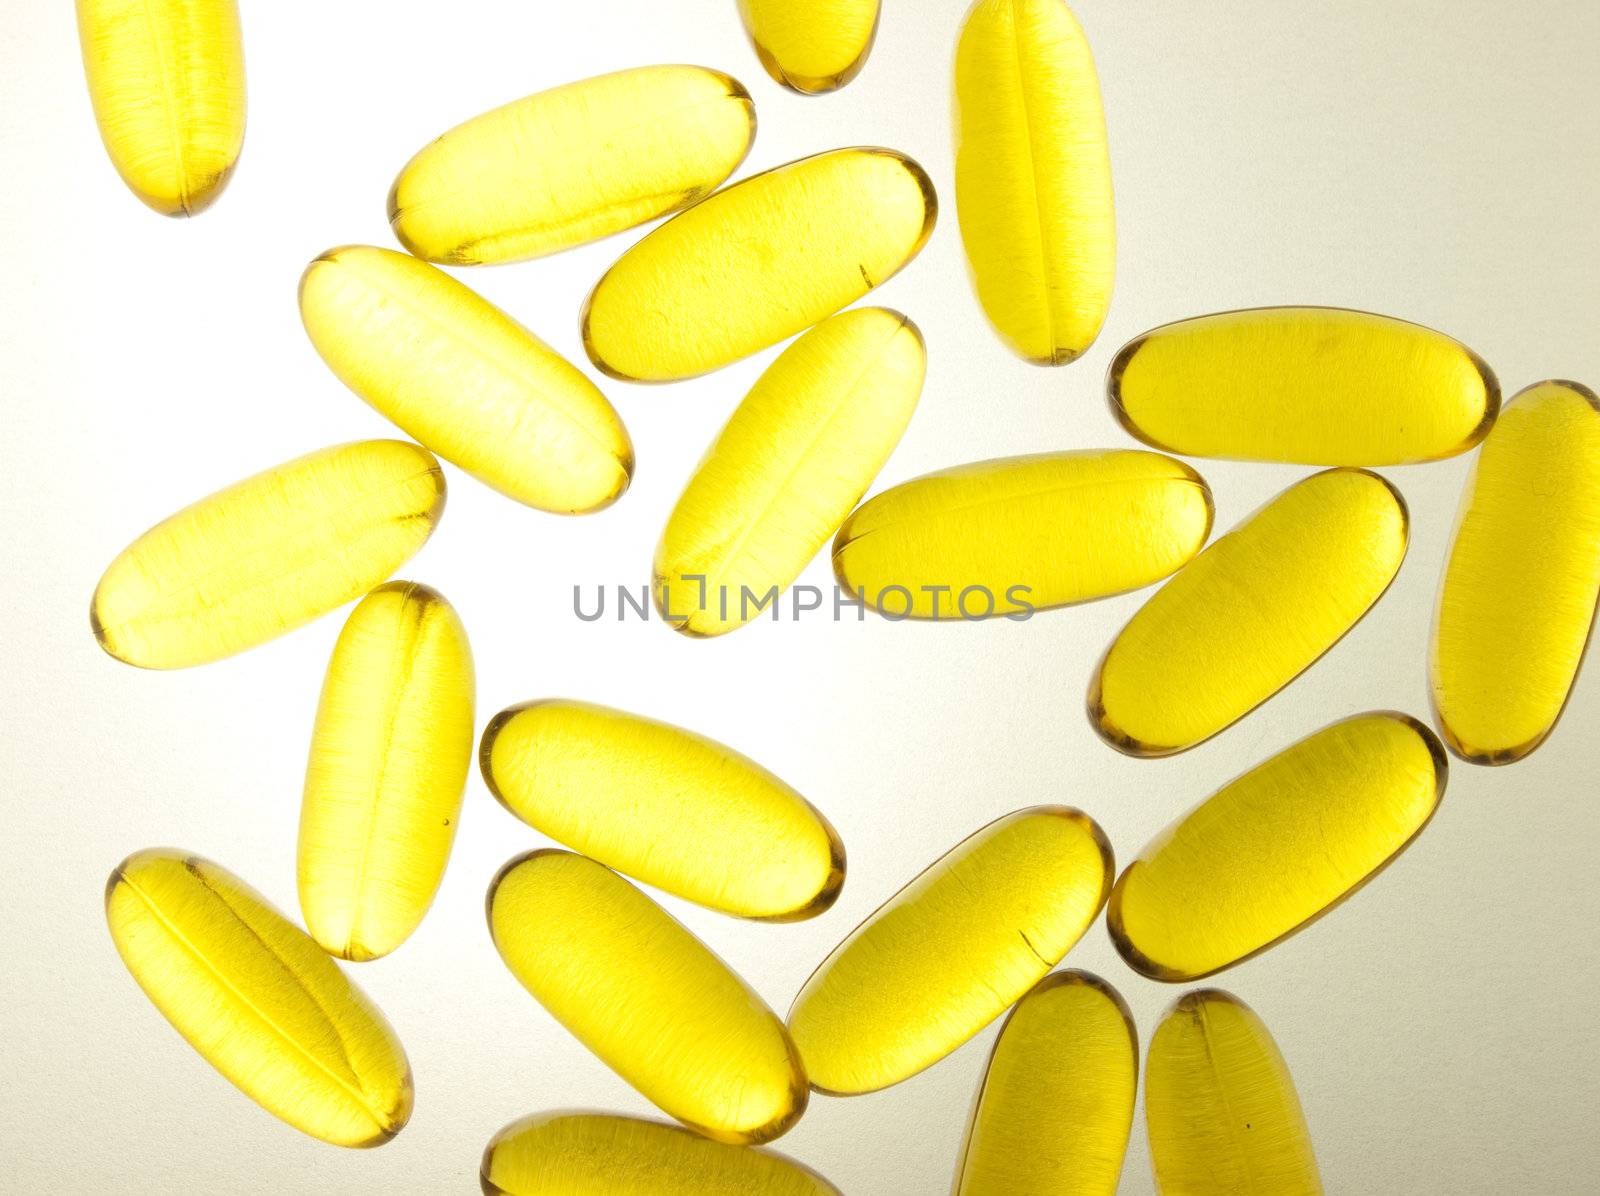 Oil vitamin yellow pills over the light